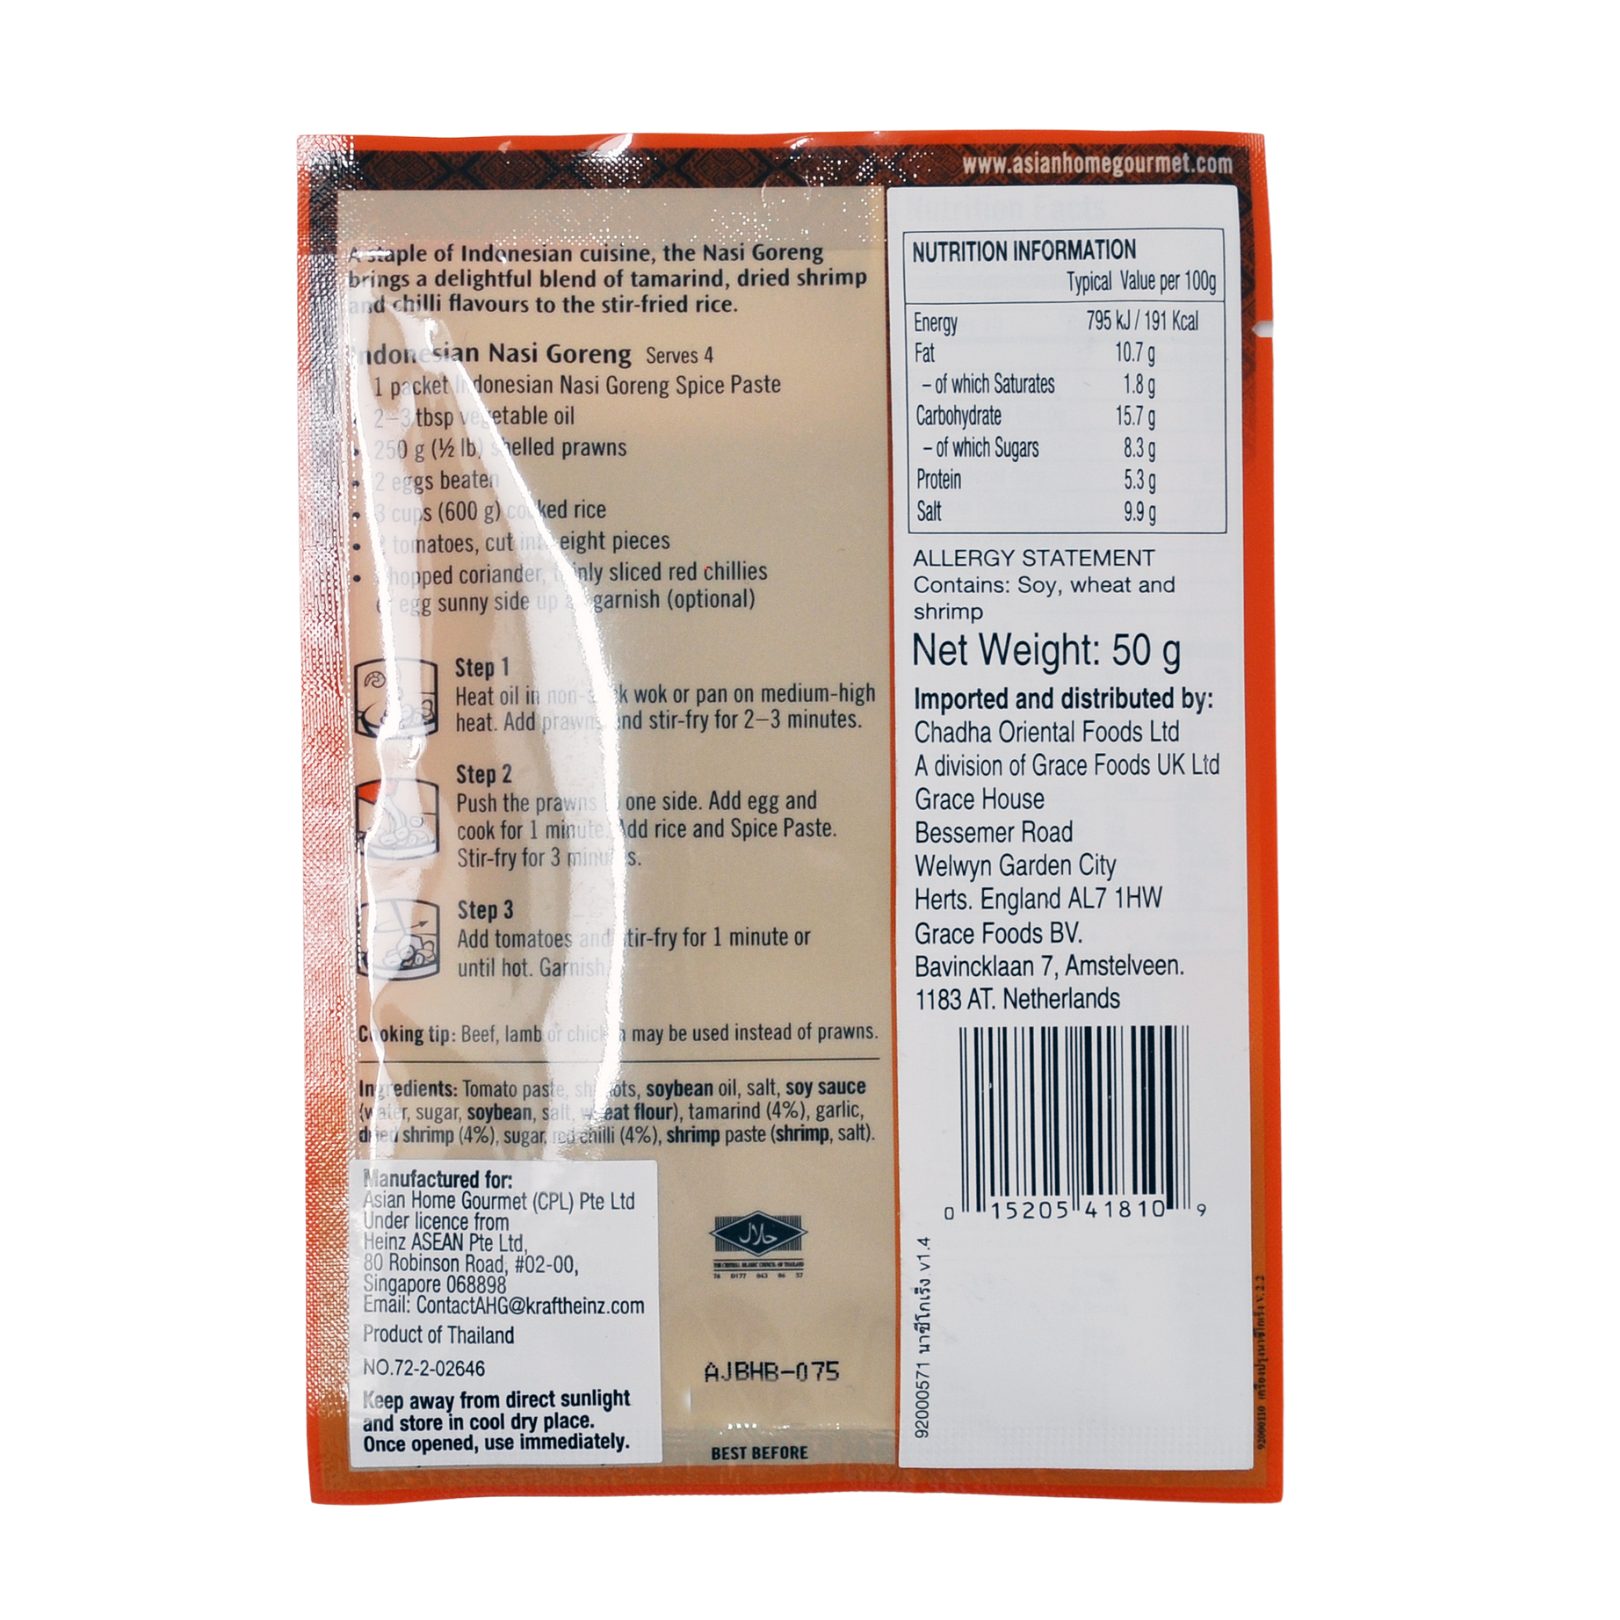 Indonesian Nasi Goreng Paste Packet 50g by AHG